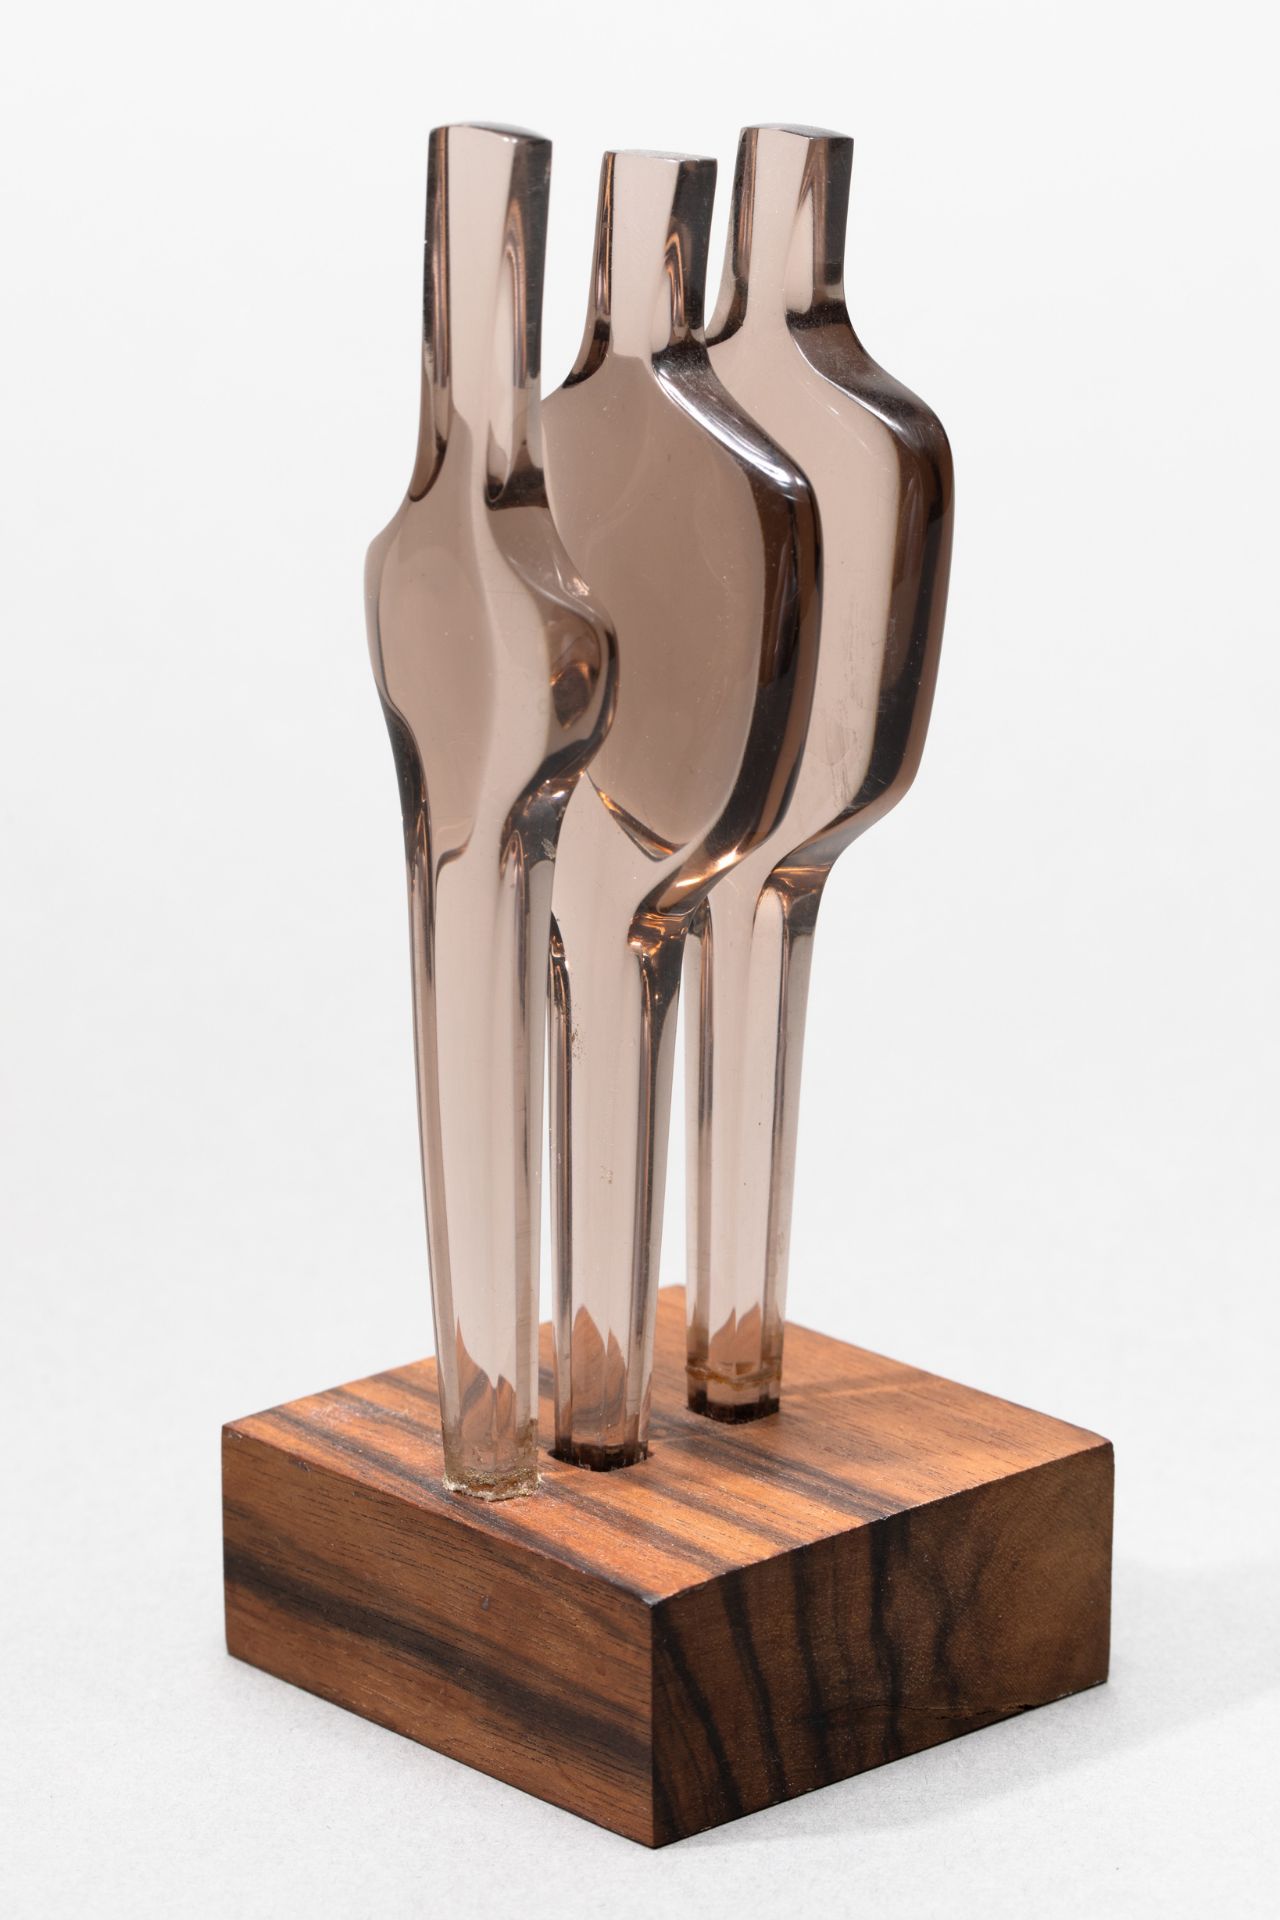 Herta & Friedrich Gebhart, Sculpture, Acrylic, wood